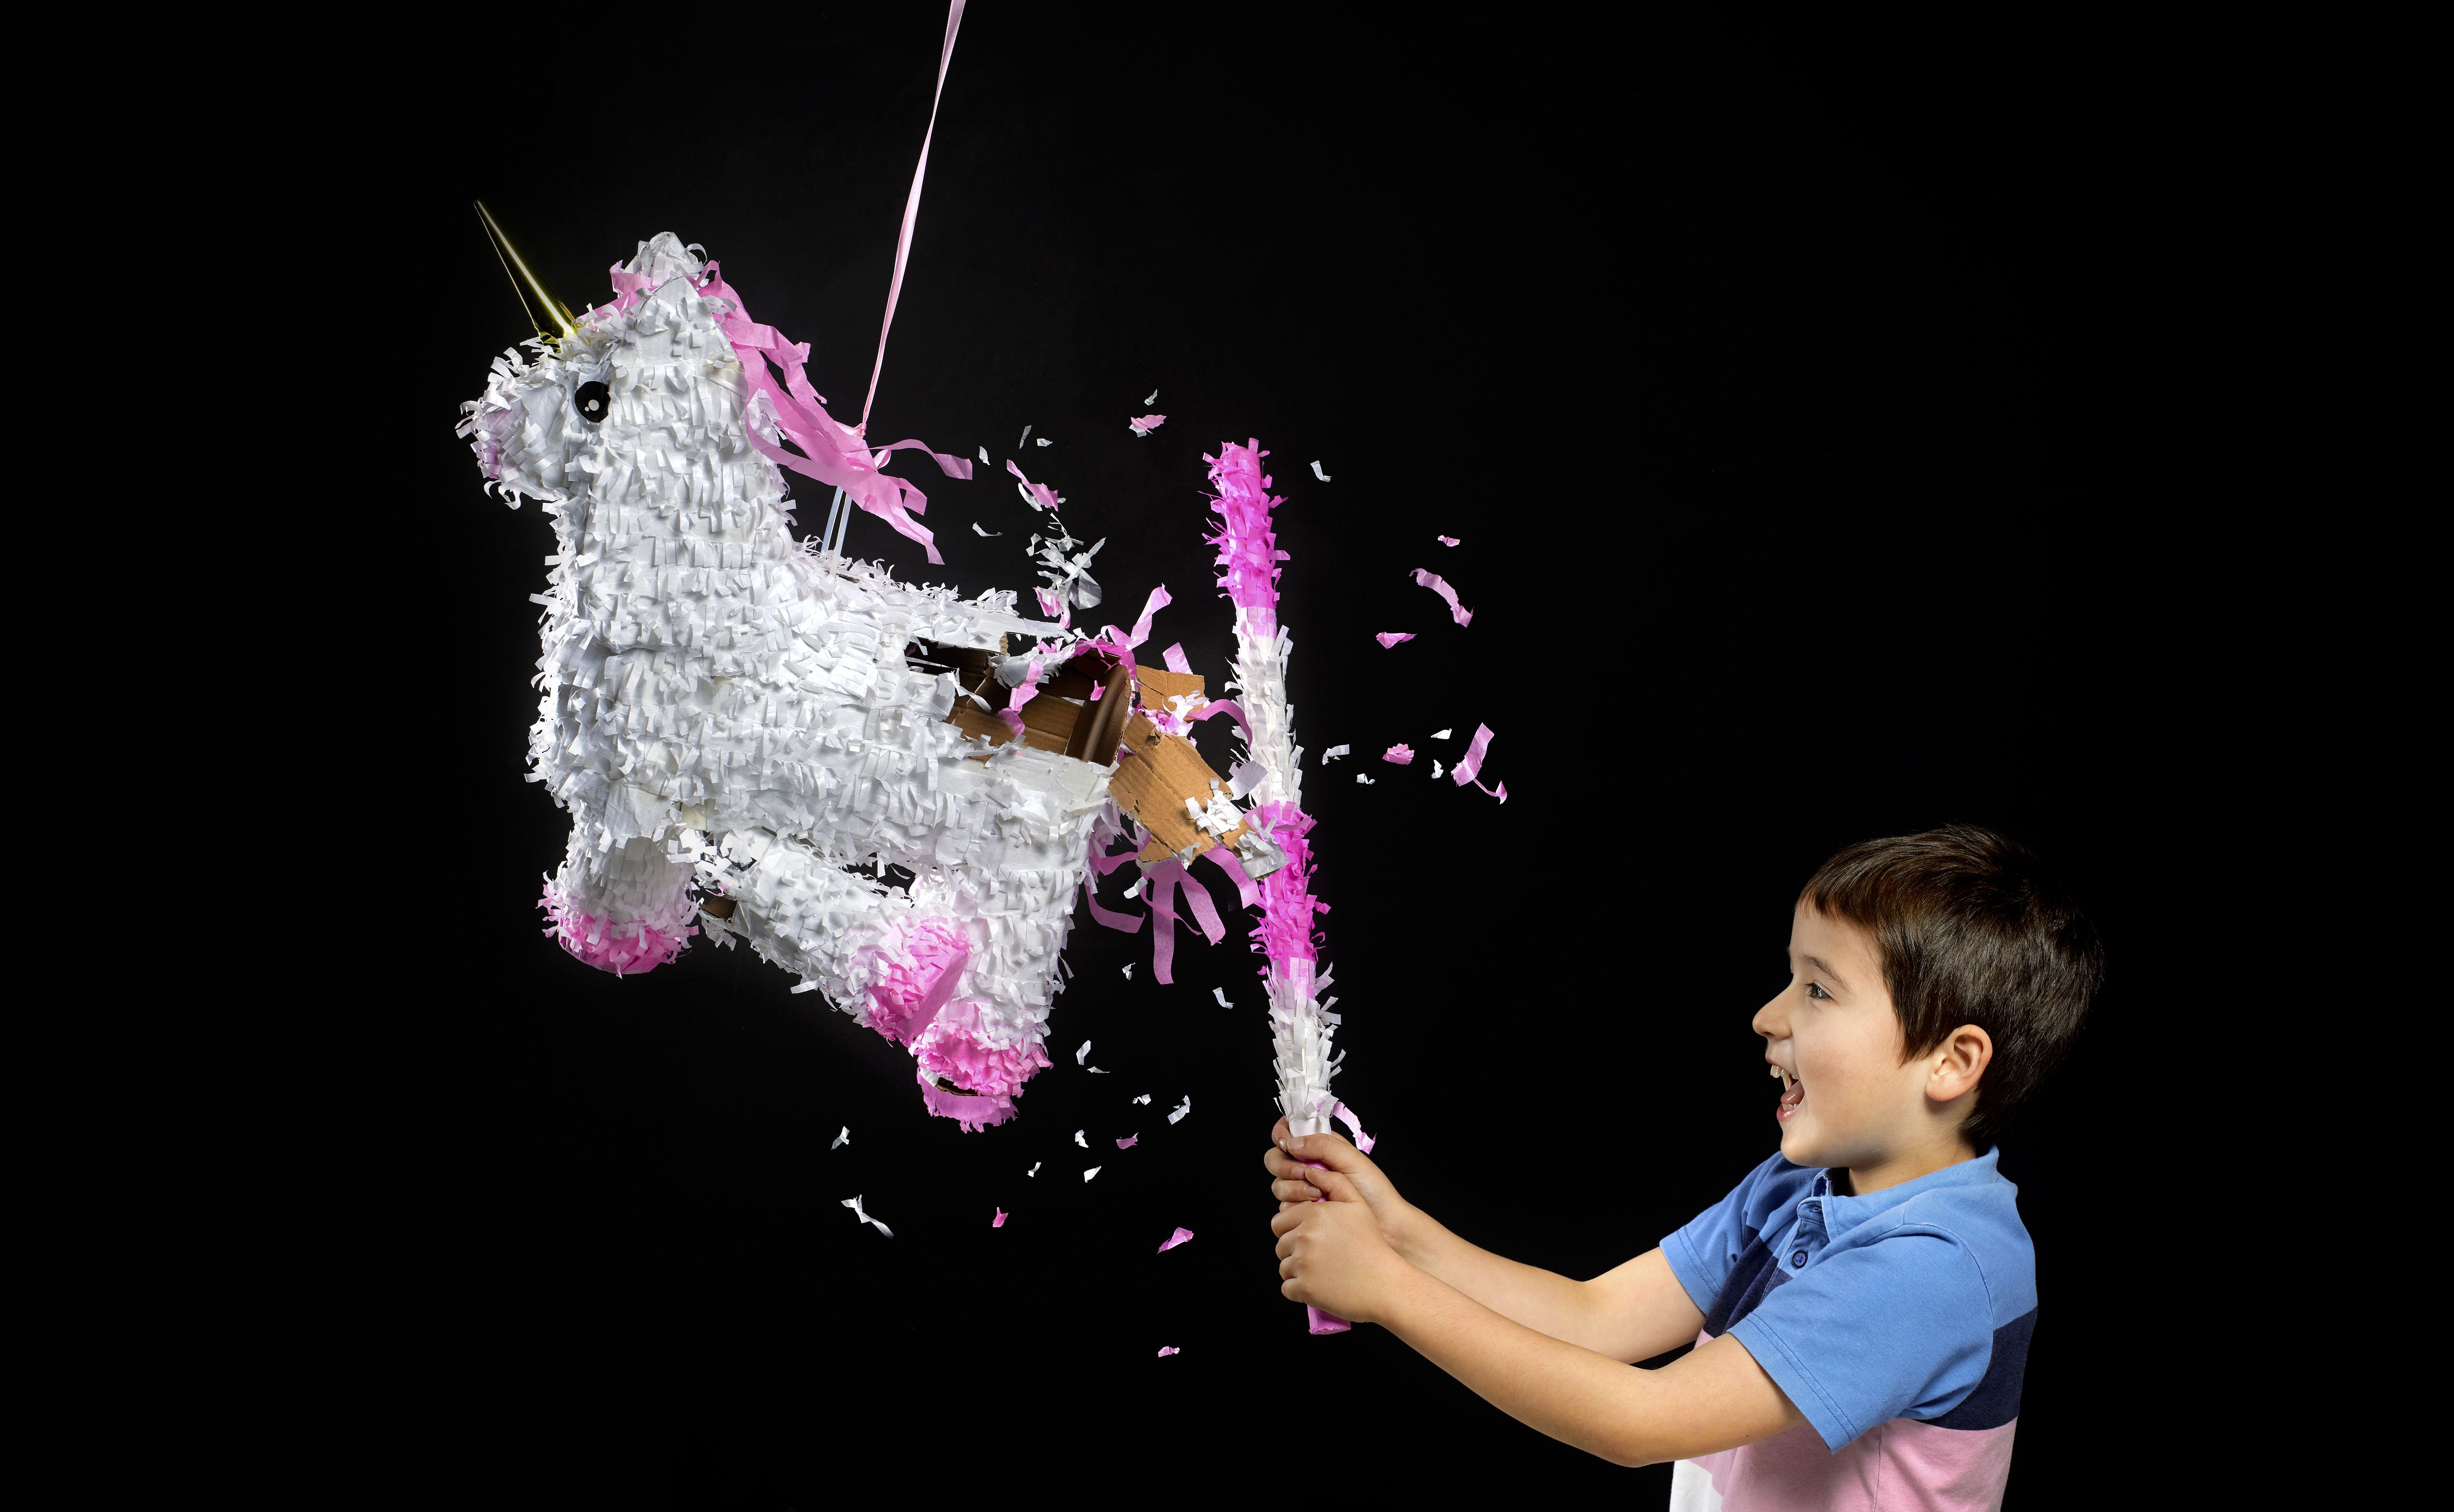 Piñata de unicornio, feliz cumpleaños, cartón, rellenar con golosinas,  chuches, decoración infantil para fiestas, ni